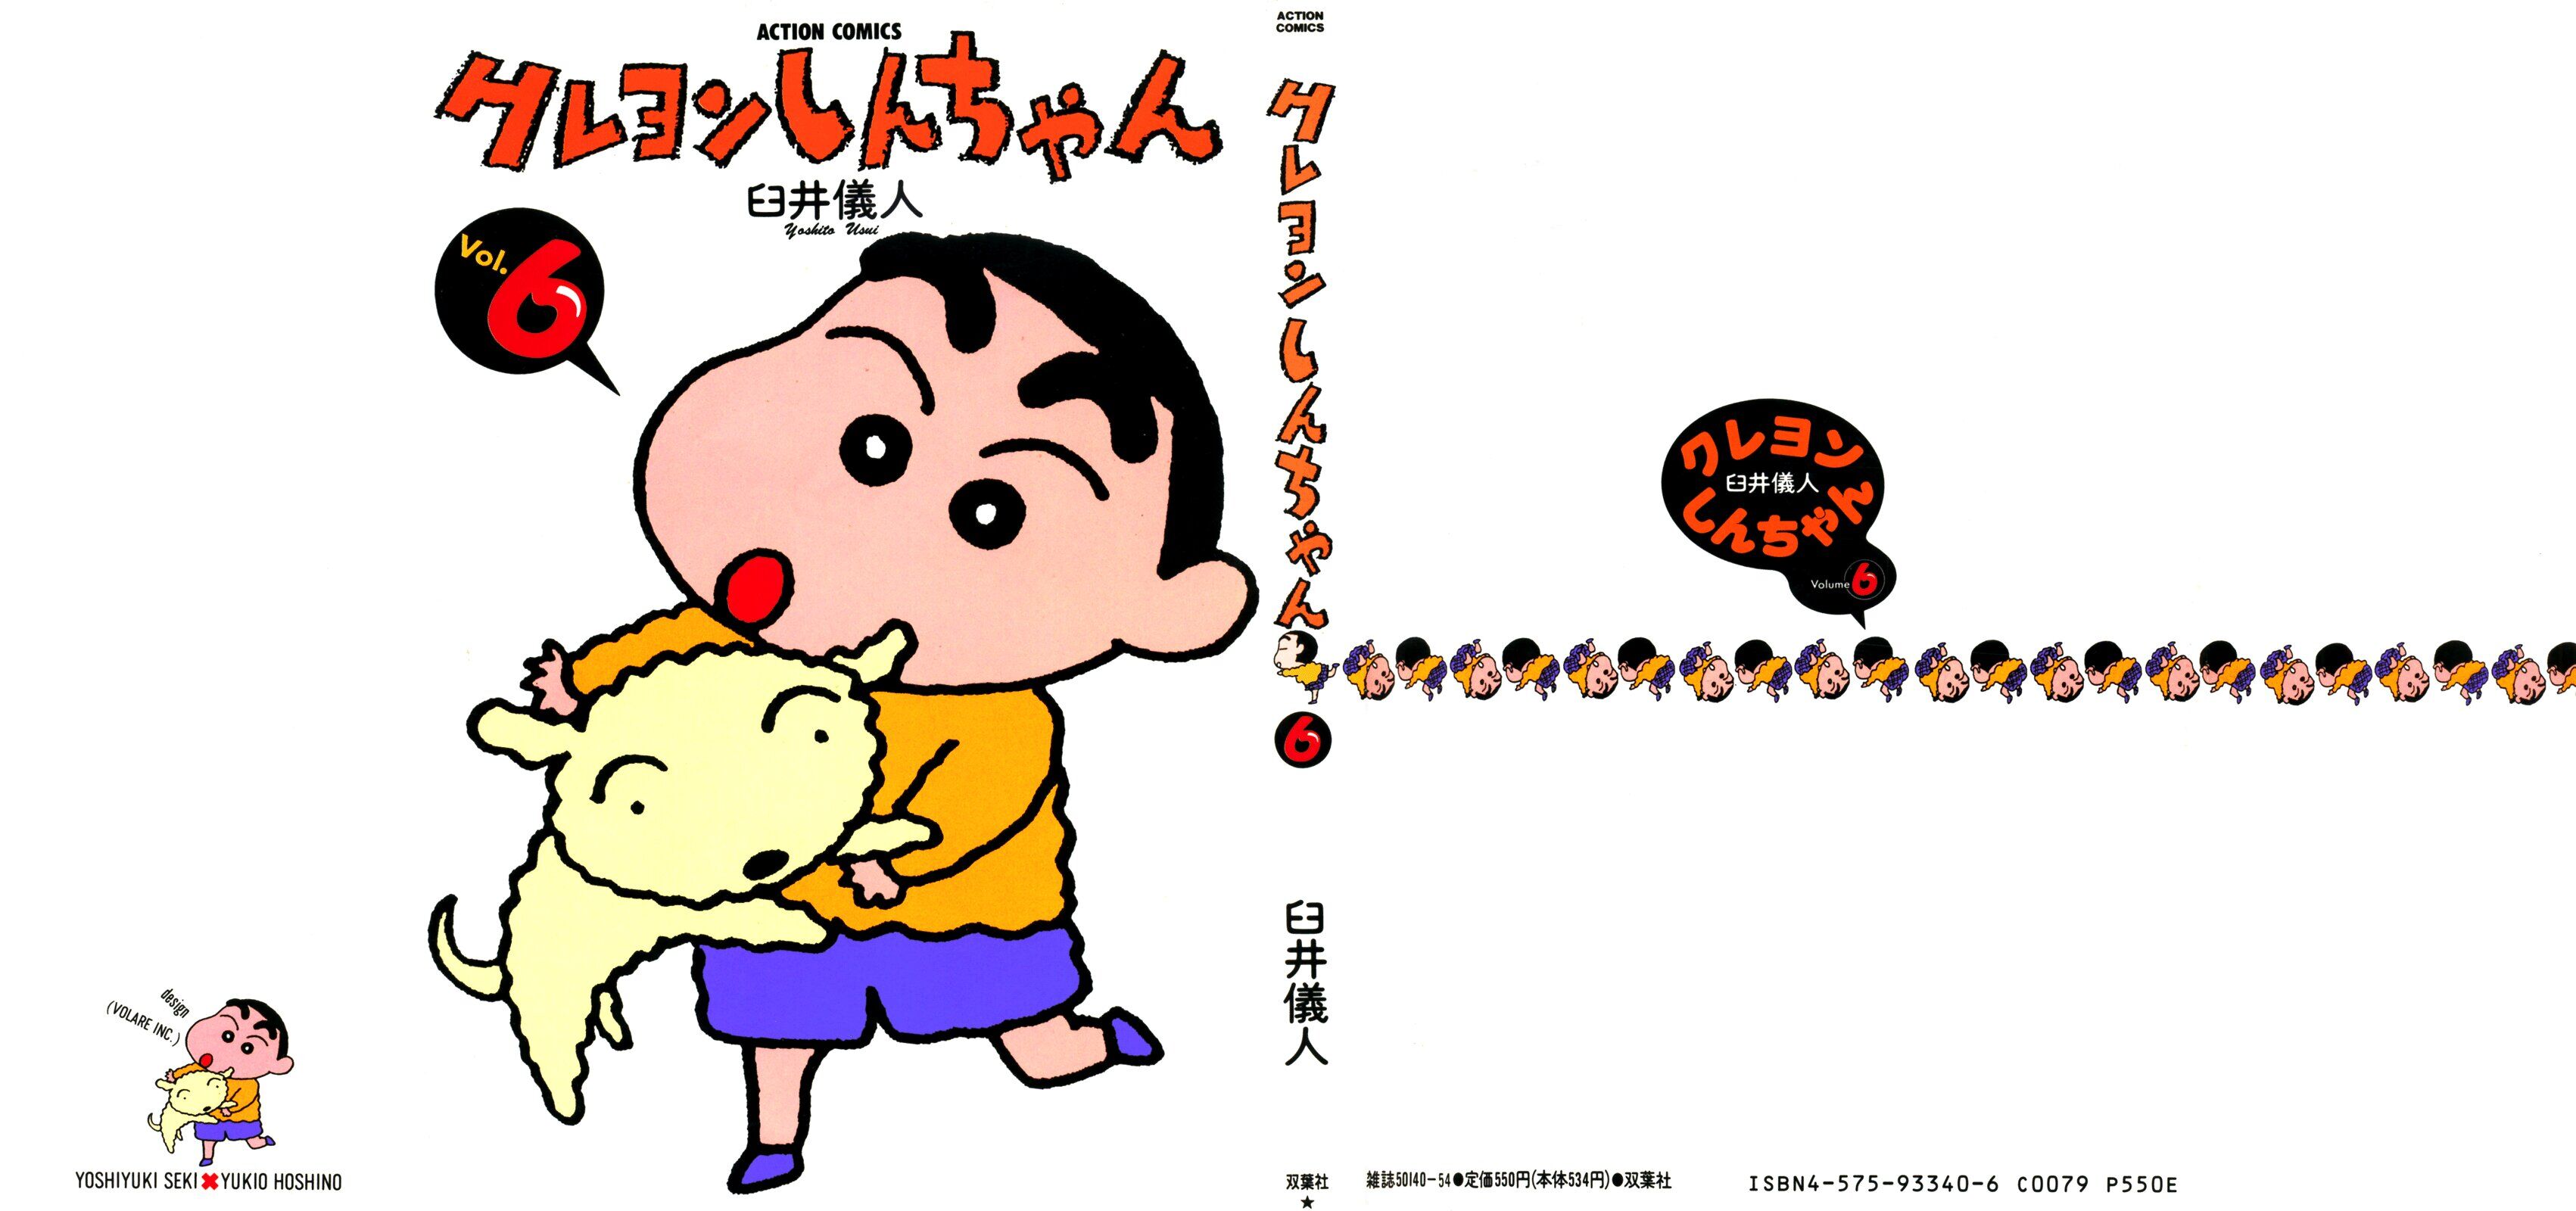 Crayon Shin-chan Manga Has a Whopping 148 Million Copies in Circulation